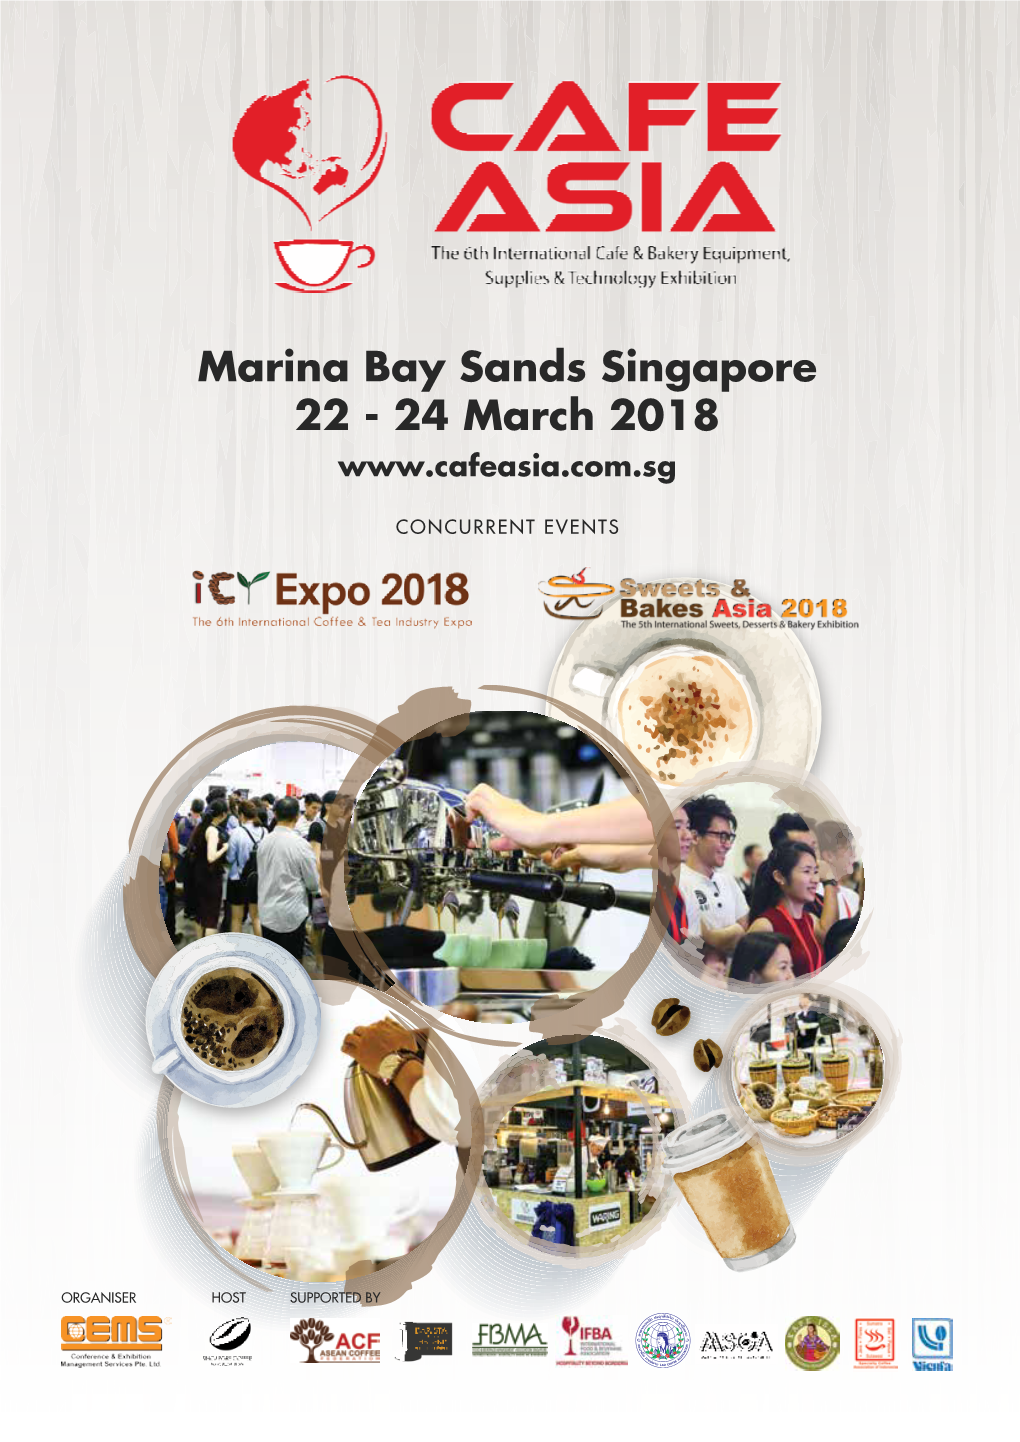 Marina Bay Sands Singapore 22 - 24 March 2018